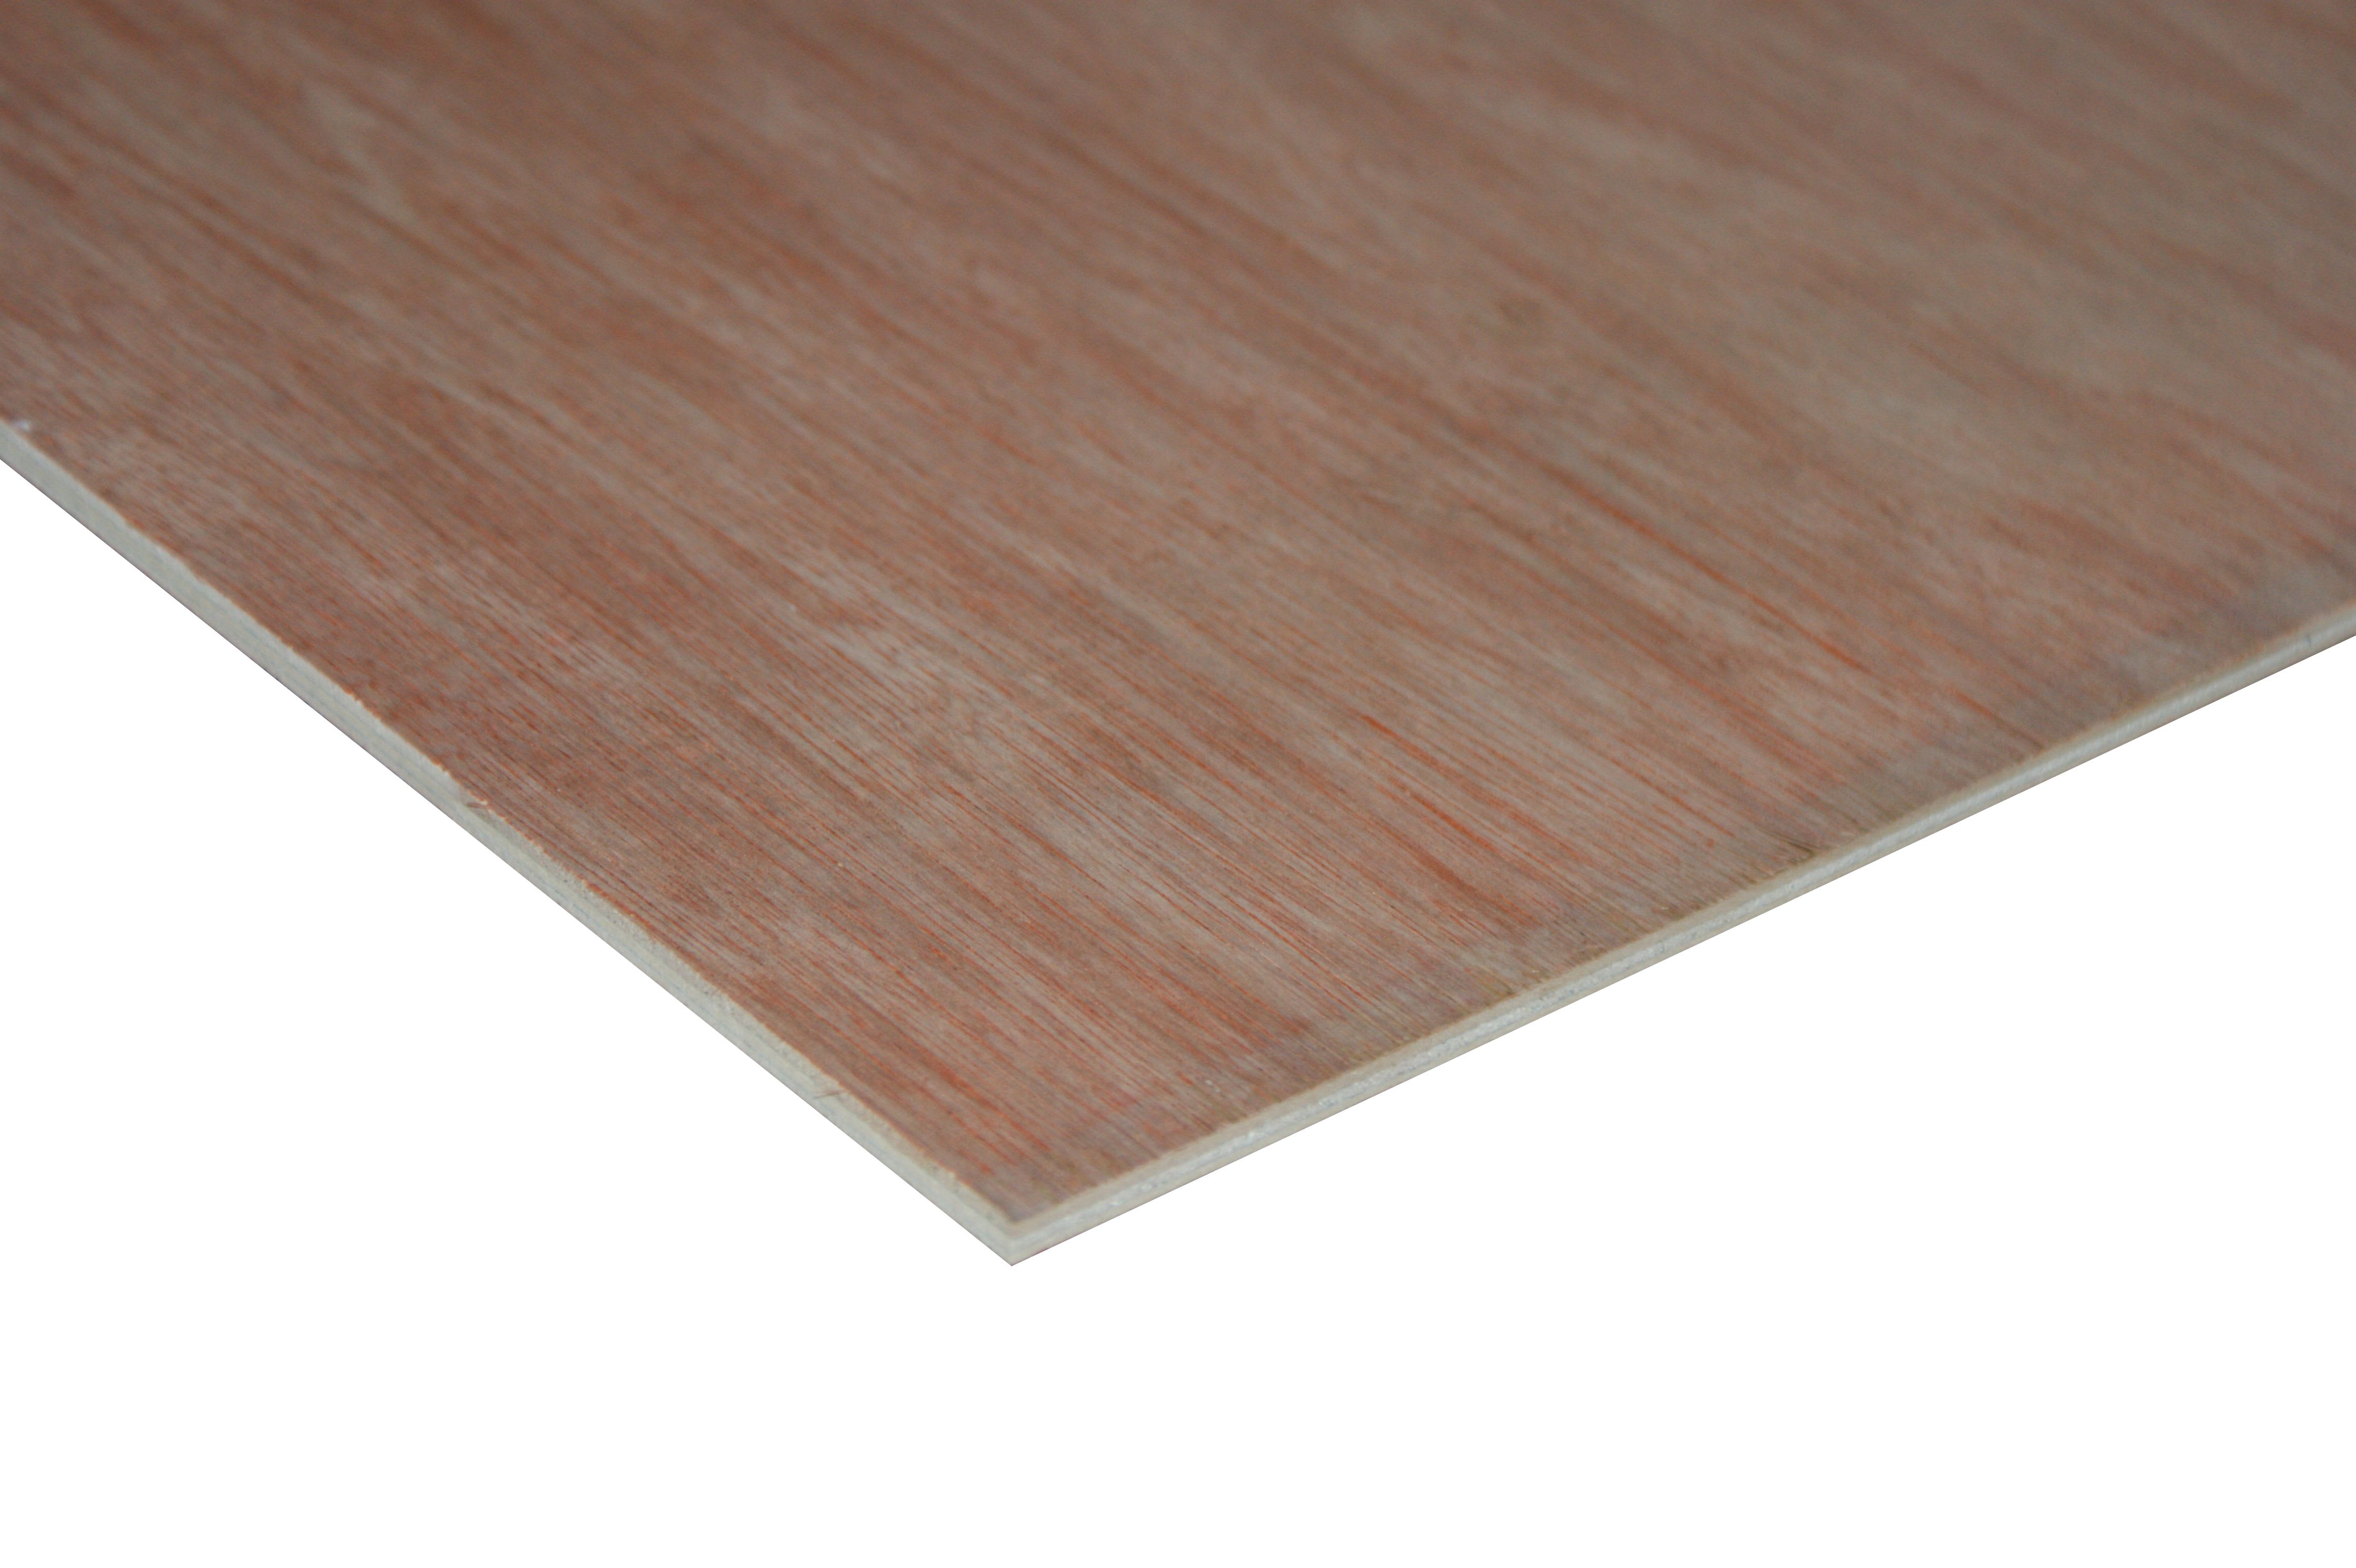 Non-Structural Hardwood Plywood Sheet - 5.5 x 606